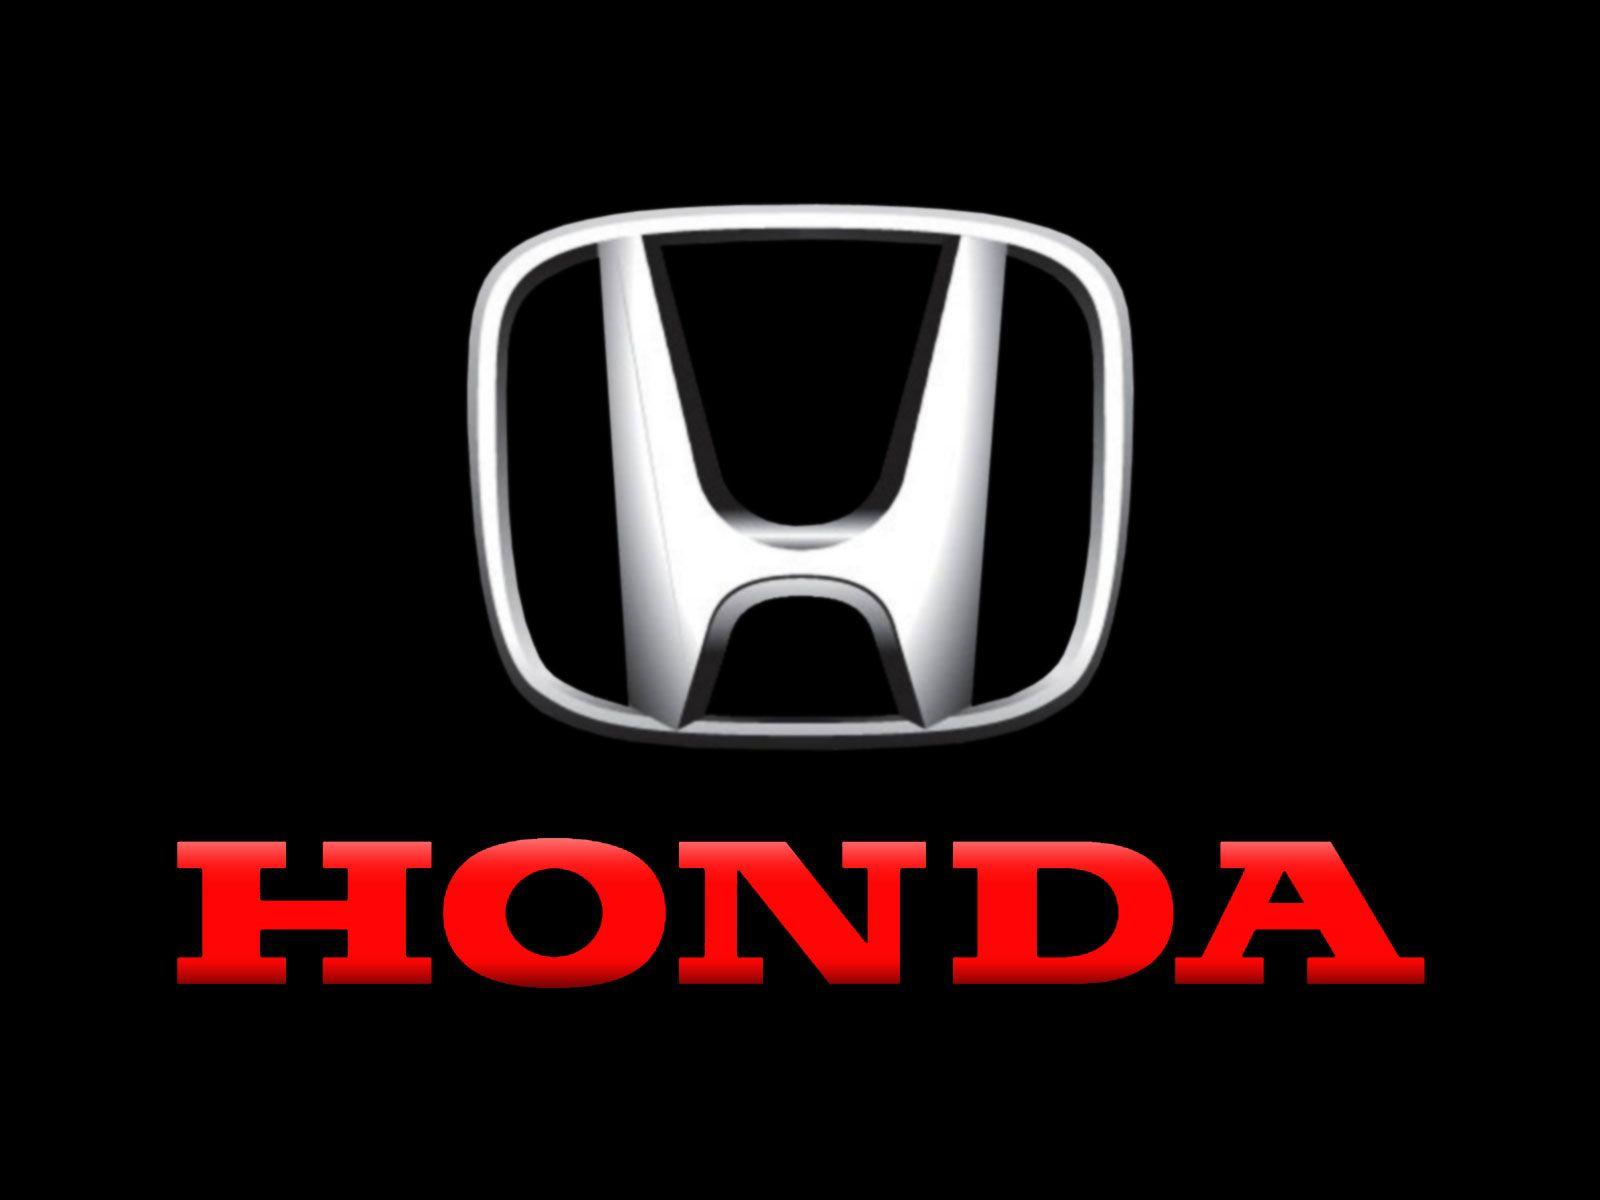 Honda Logo Best Image. All CAR BIKE LOGO FREE DOWNLOAD